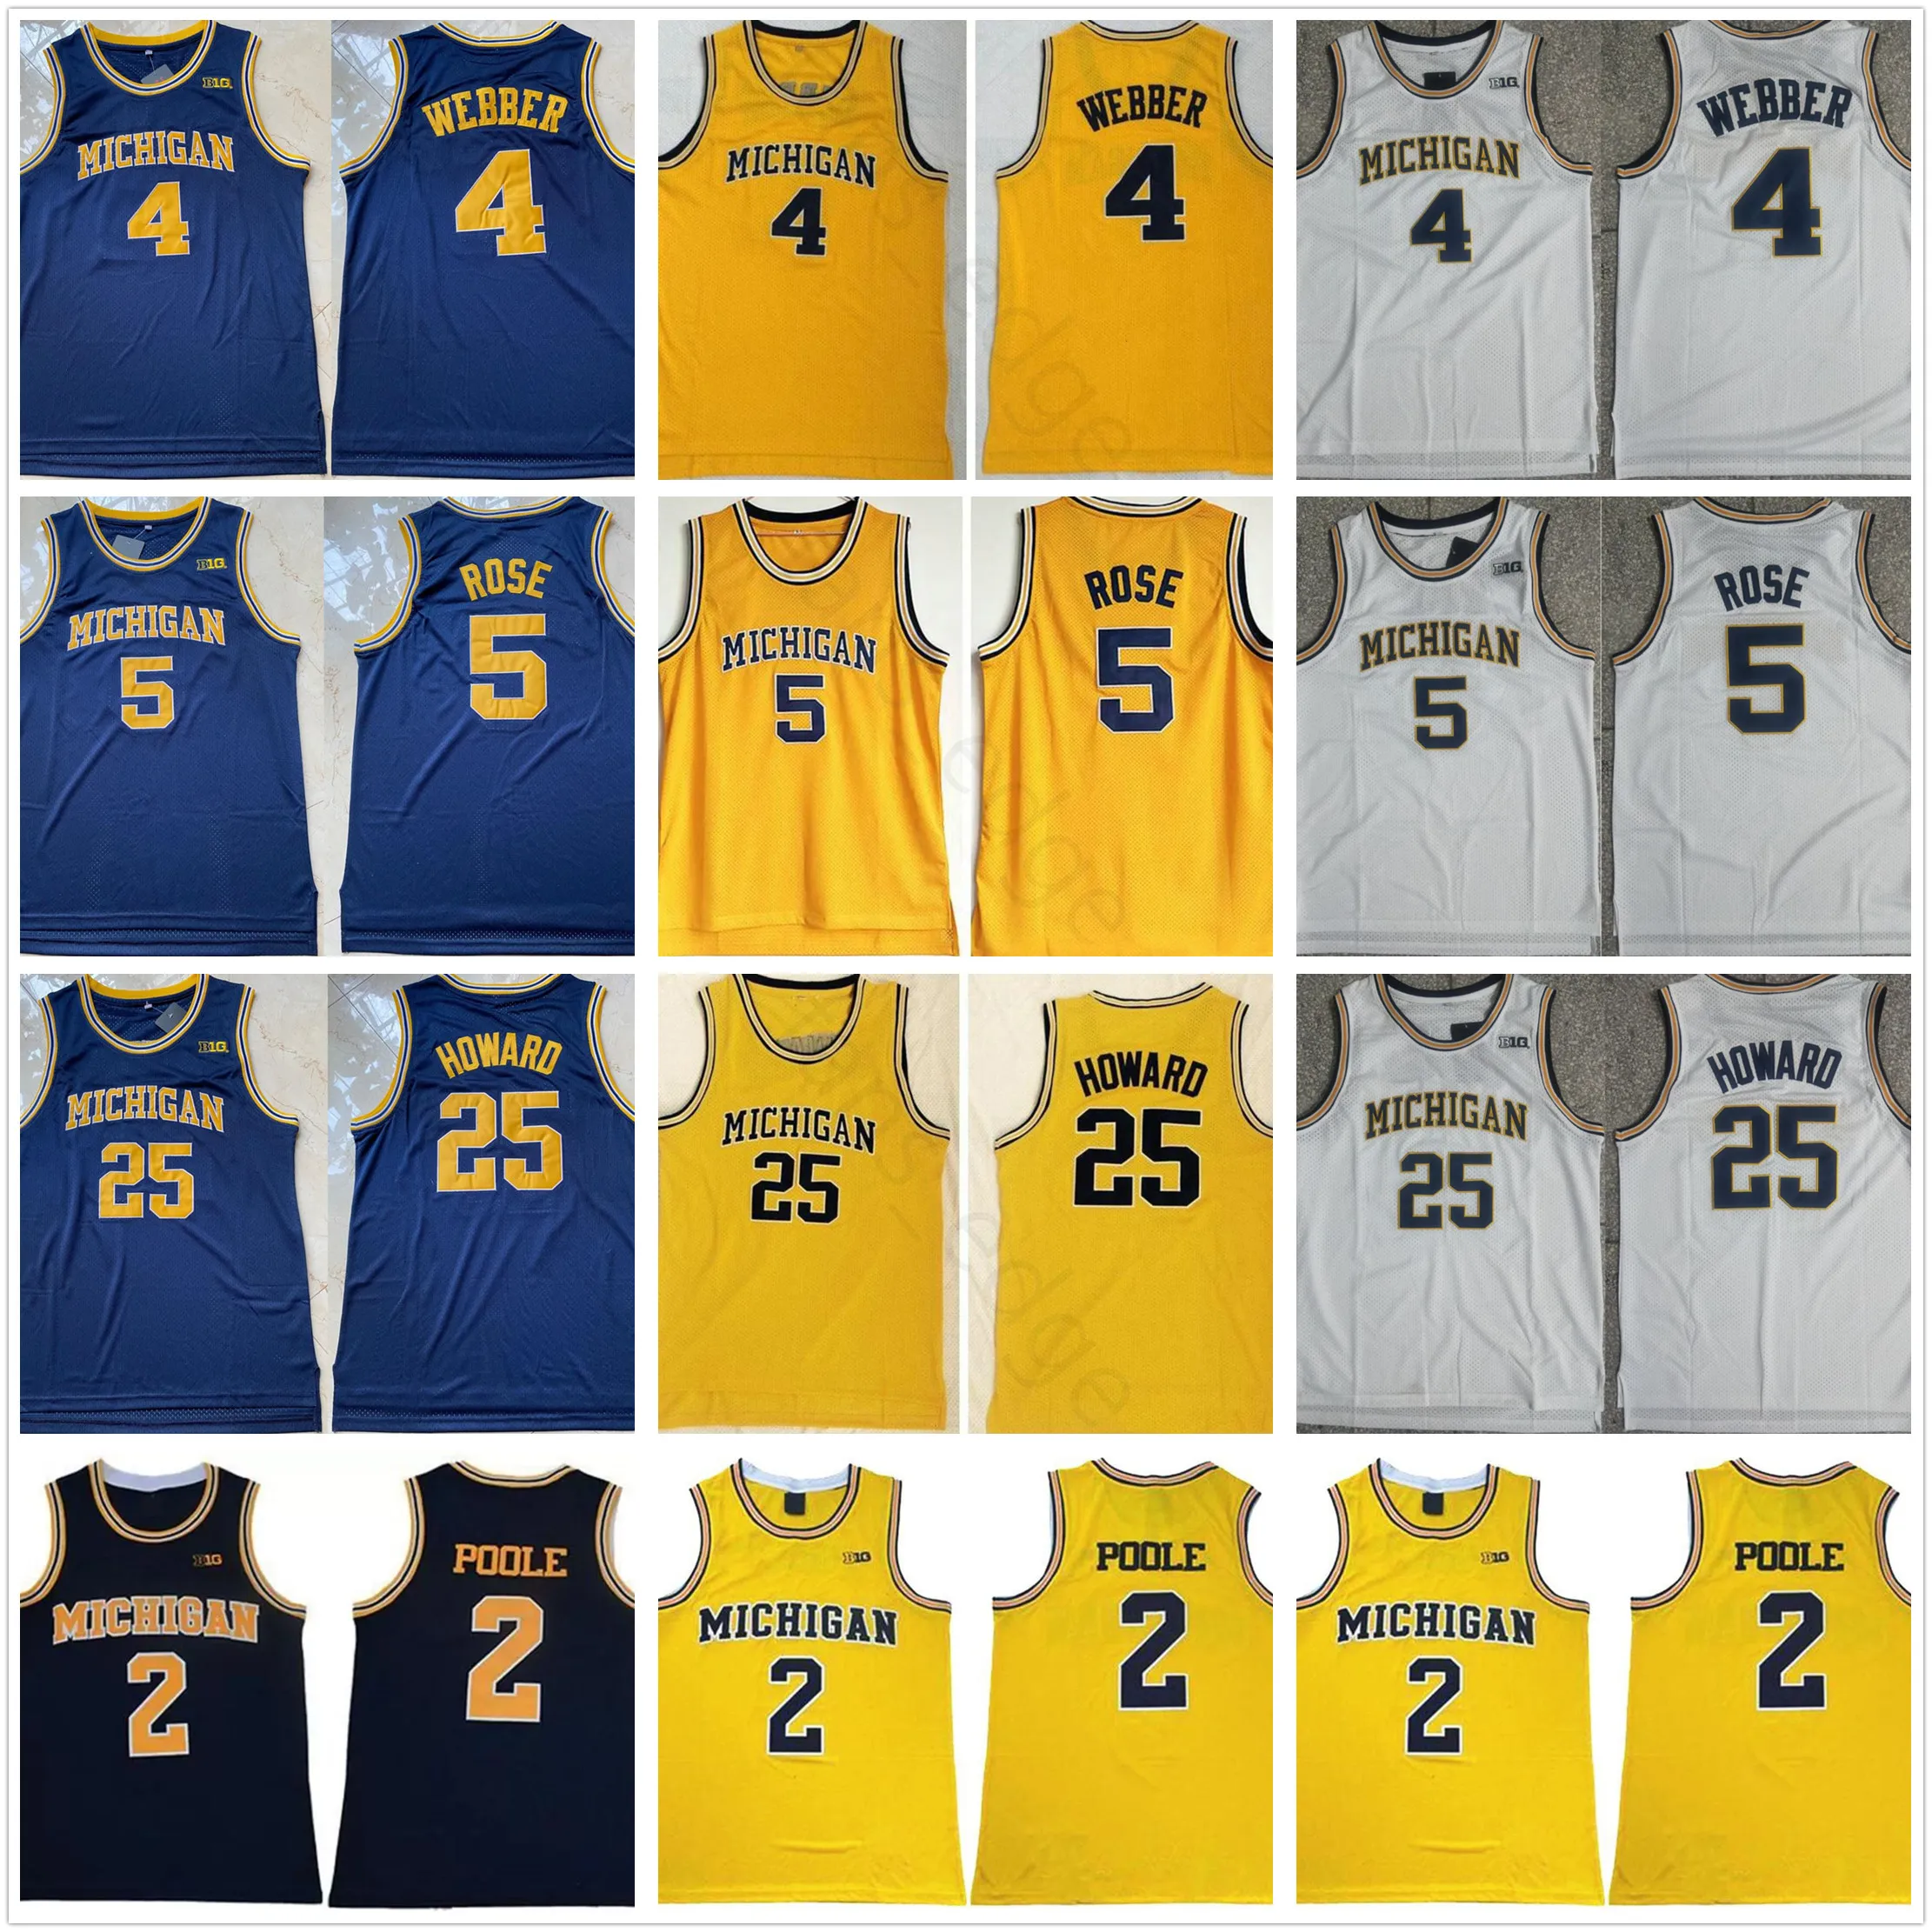 NCAA Michigan Wolverines College 2 Poole Basketball Jerseys 5 Jalen Rose 4 Chris Webber 25 Juwan Howard vintage Amarelo azul branco Camisas costuradas S-xxl